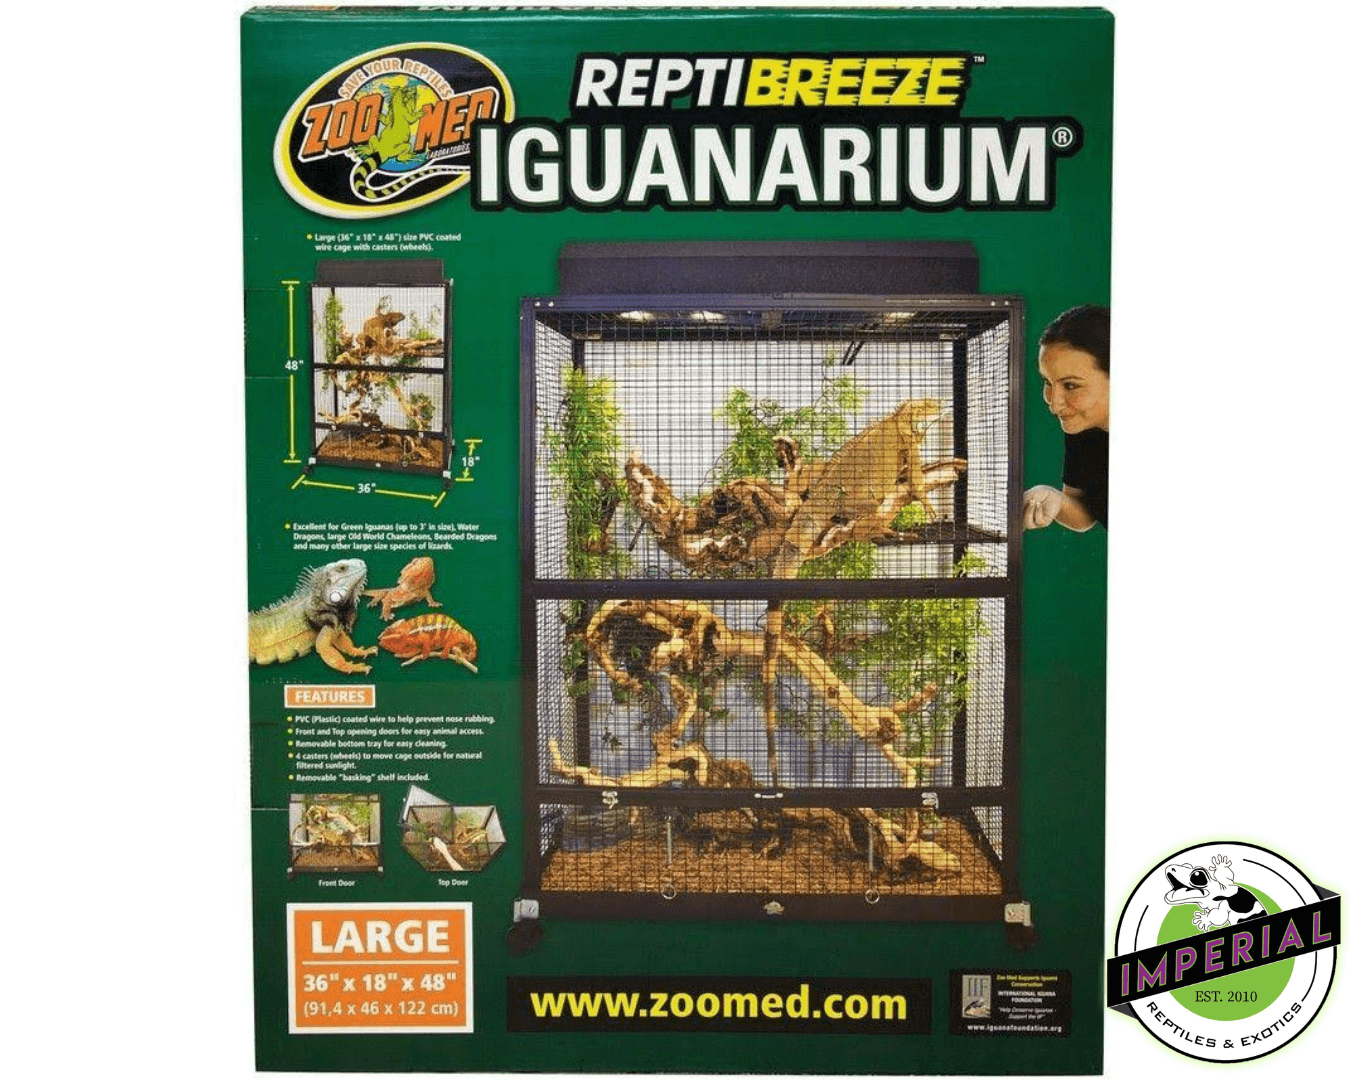 reptibreeze iguanarium for sale online, buy cheap reptile supplies near me